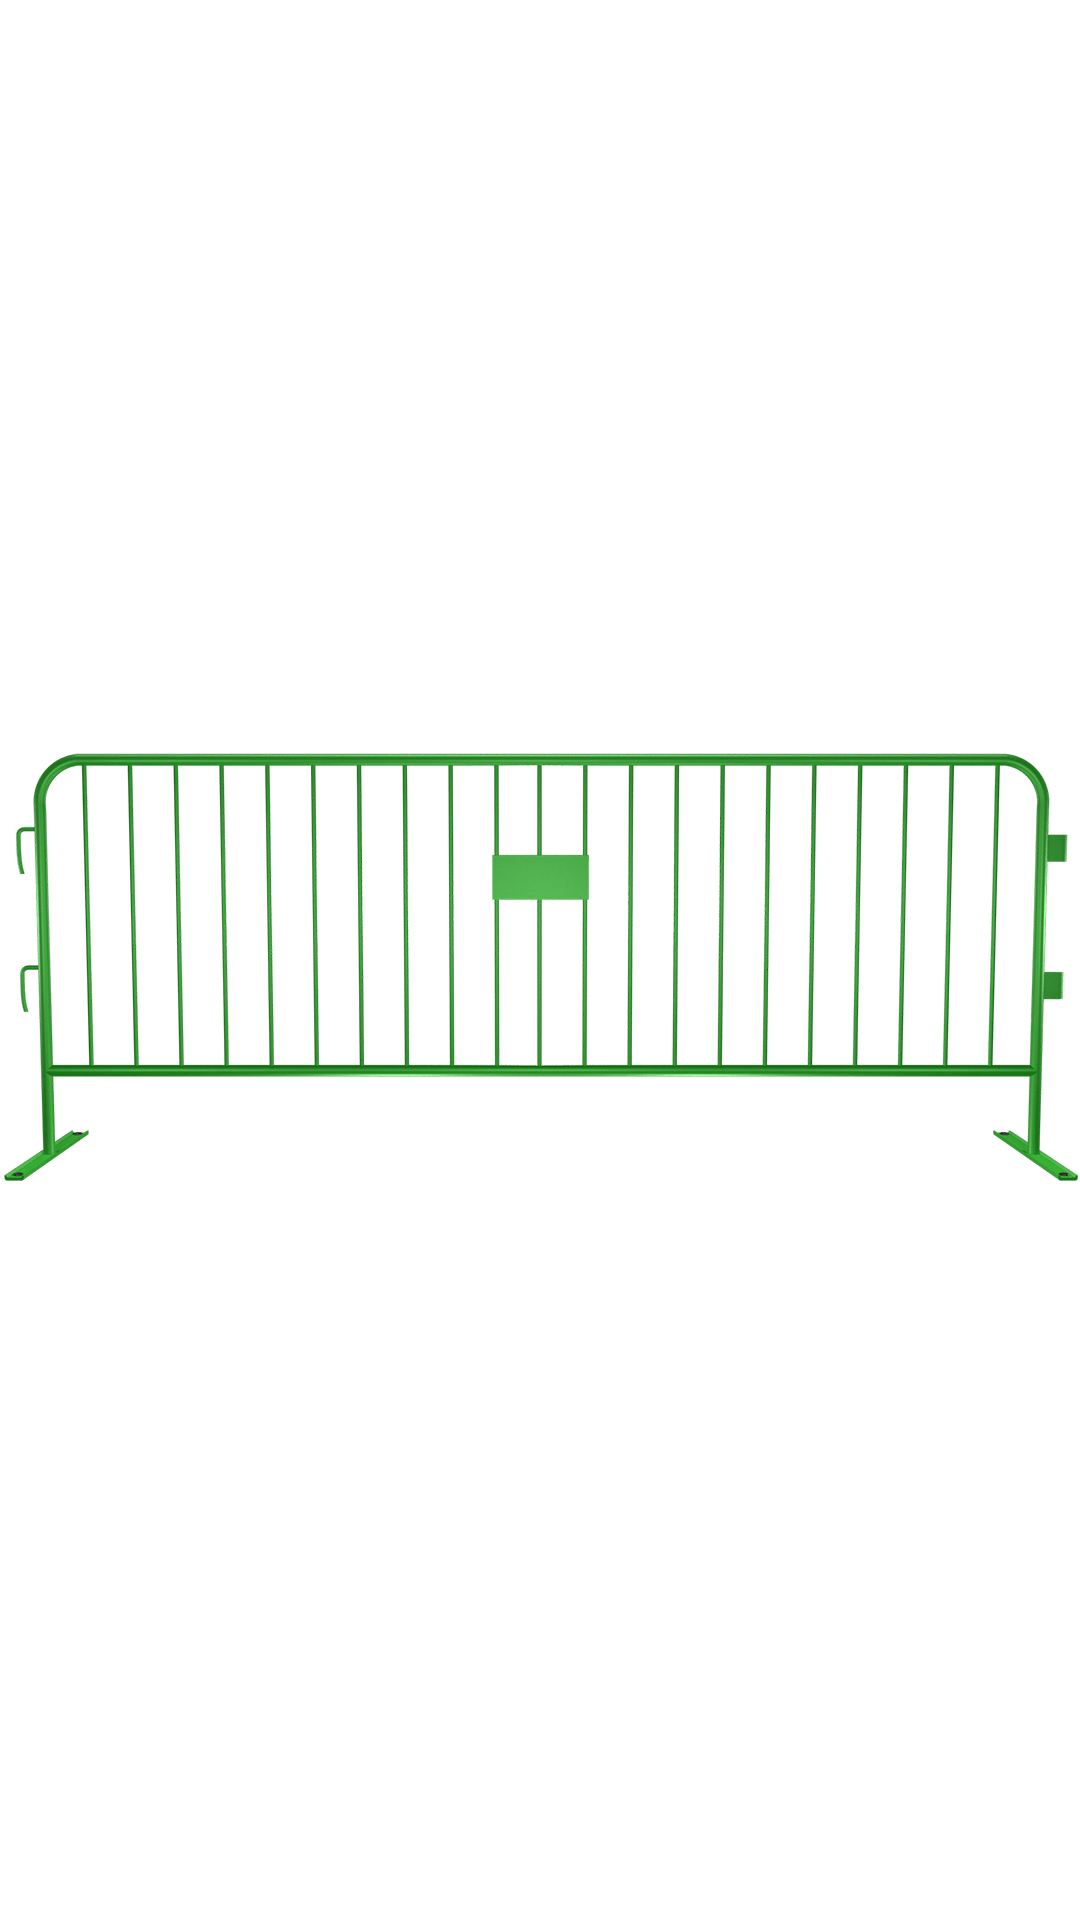 Green Colored Steel Barricade